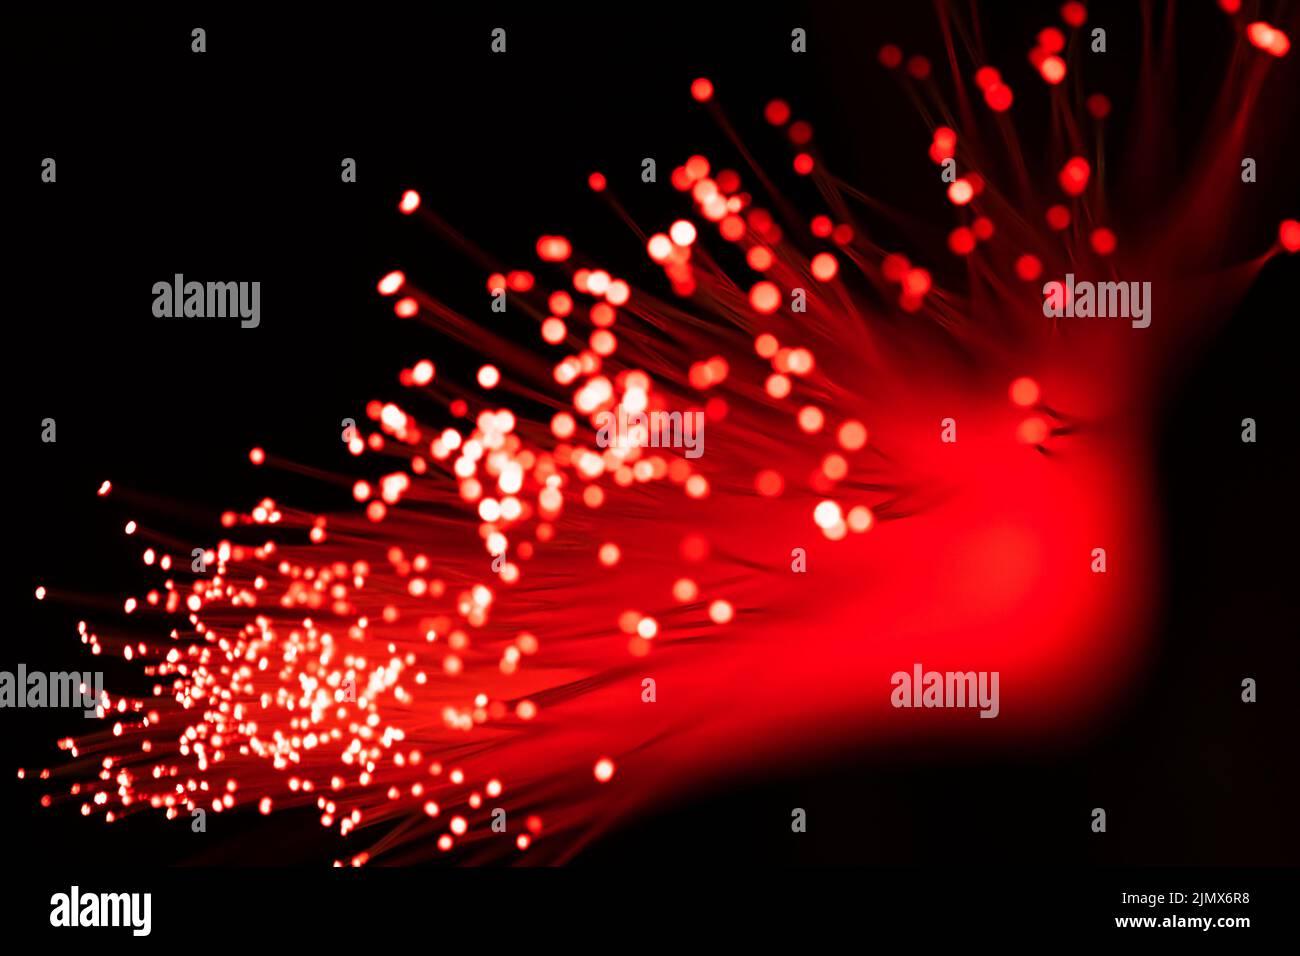 Fiber optics lights abstract background Stock Photo